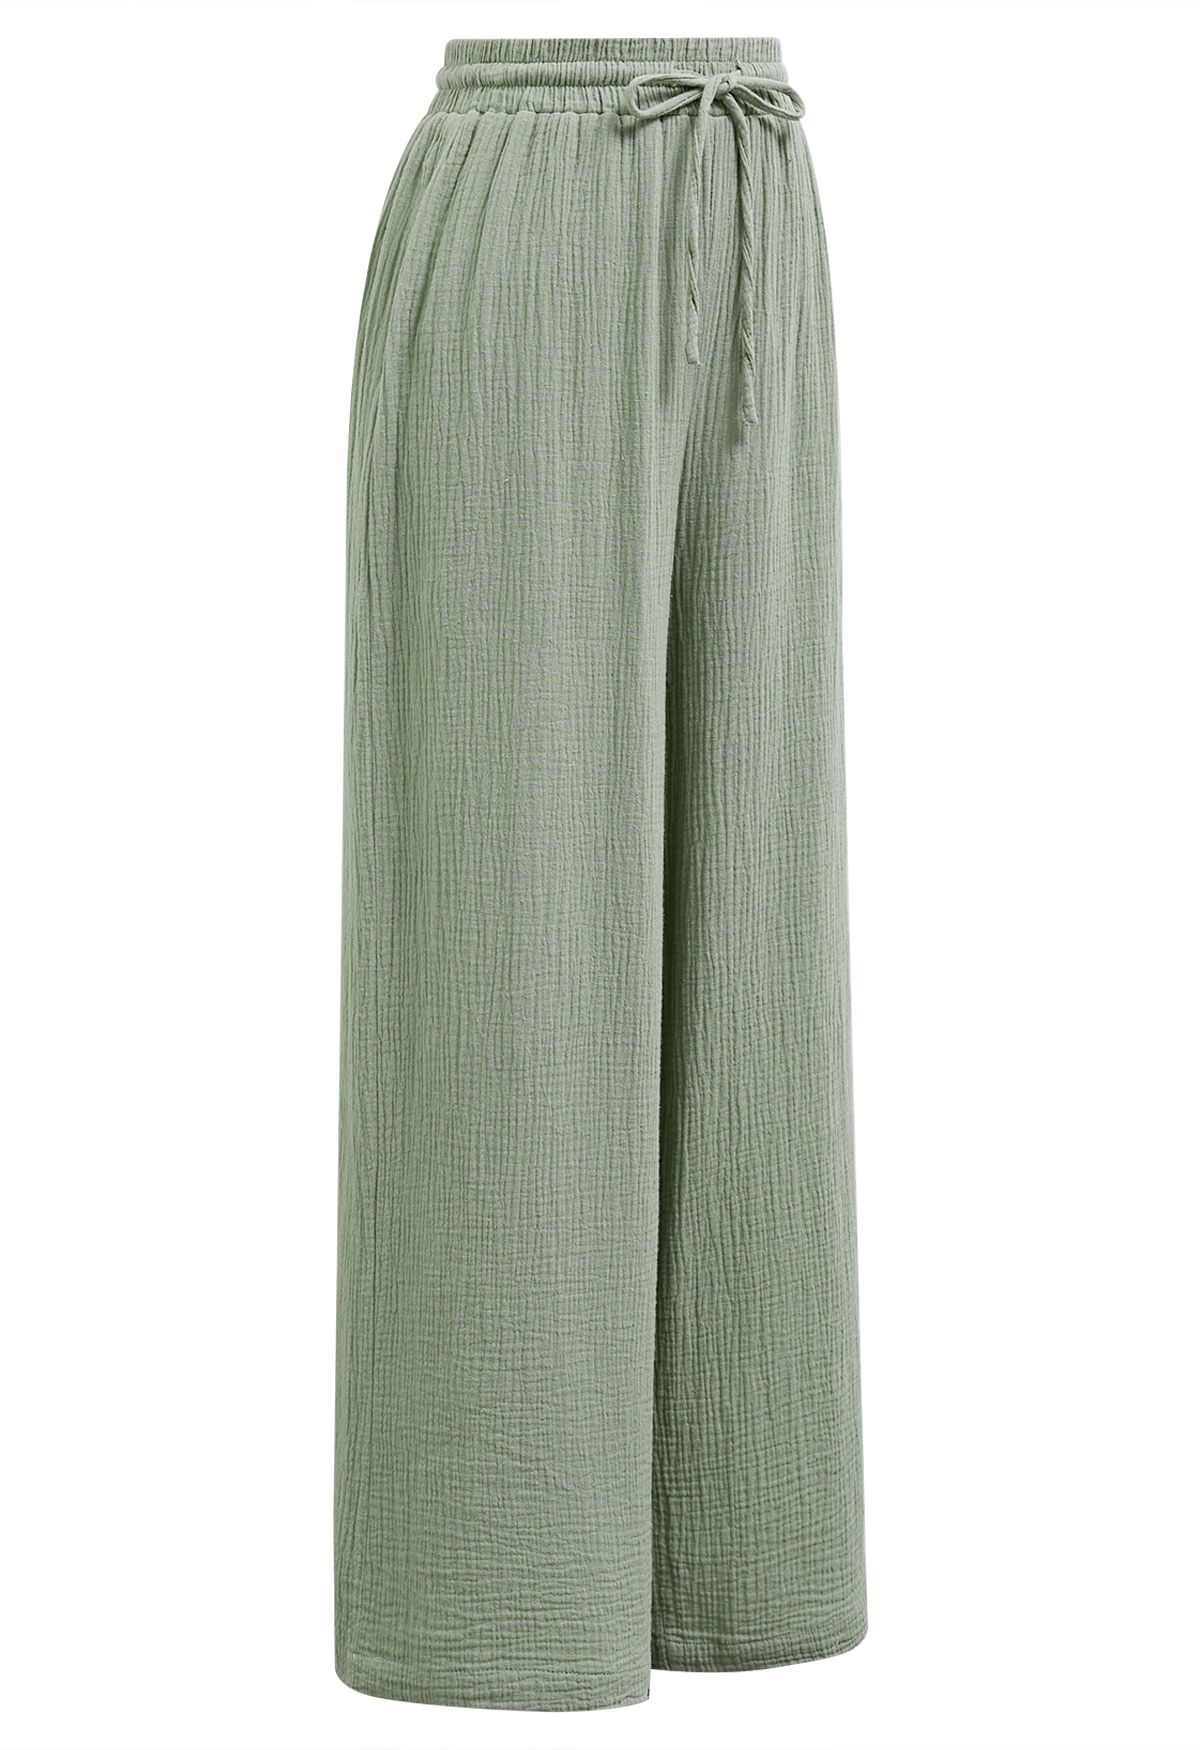 Lightweight Cotton Drawstring Pants in Pea Green